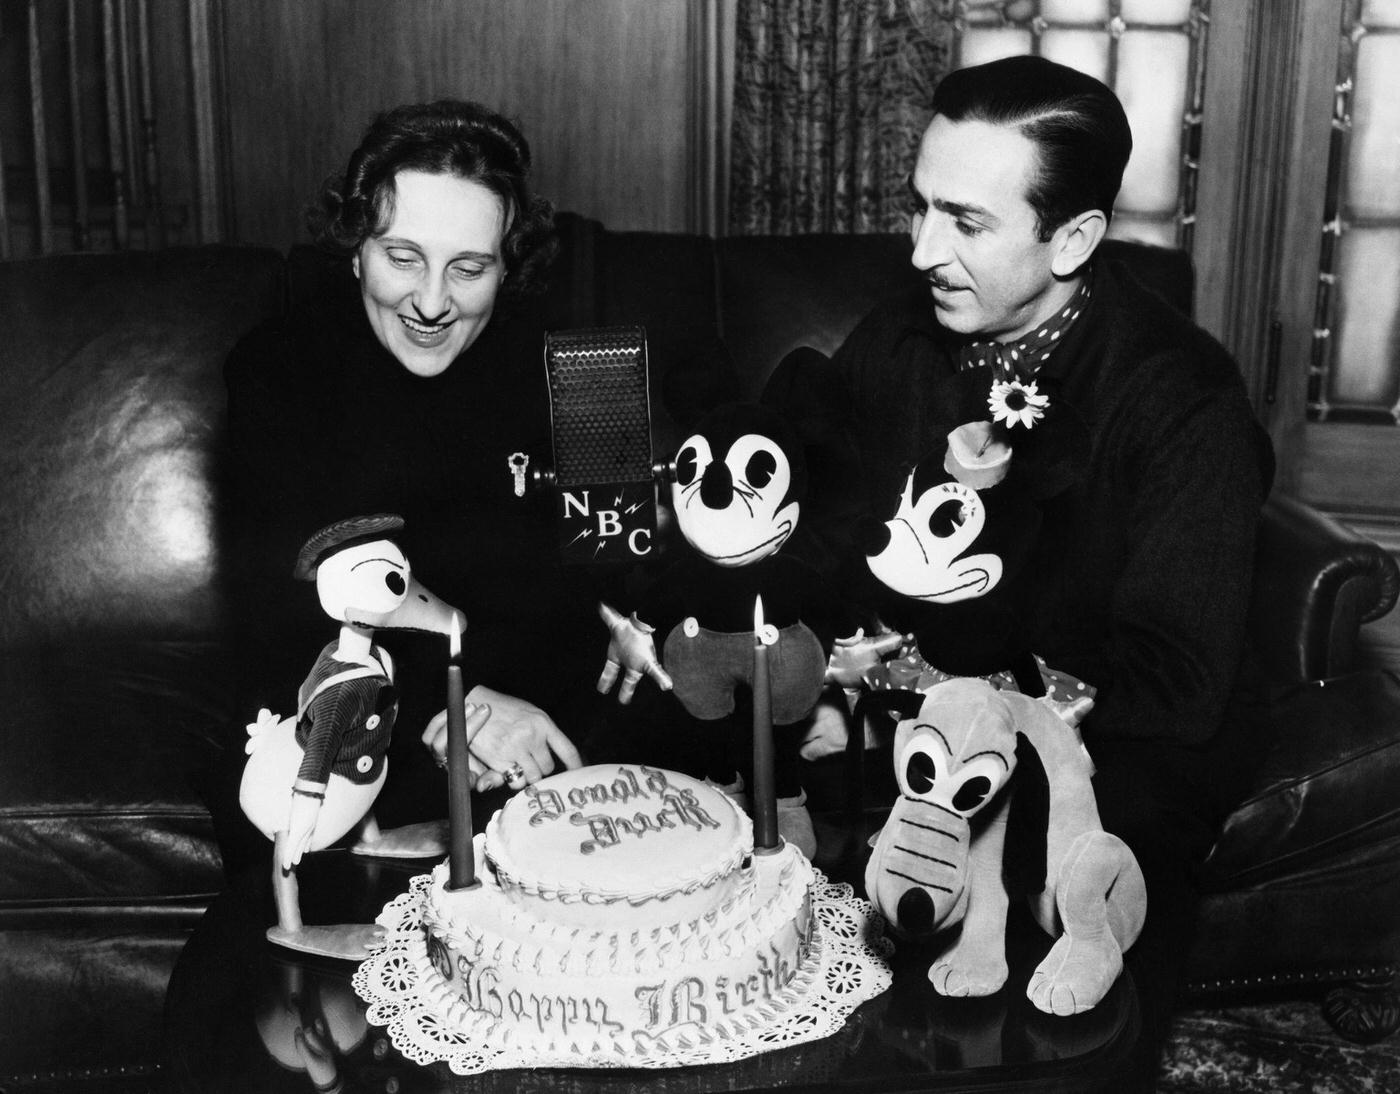 Walt Disney. Donald Duck, Elza Schallert, Mickey Mouse, Walt Disney, Minnie Mouse, Pluto with a birthday cake for Donald